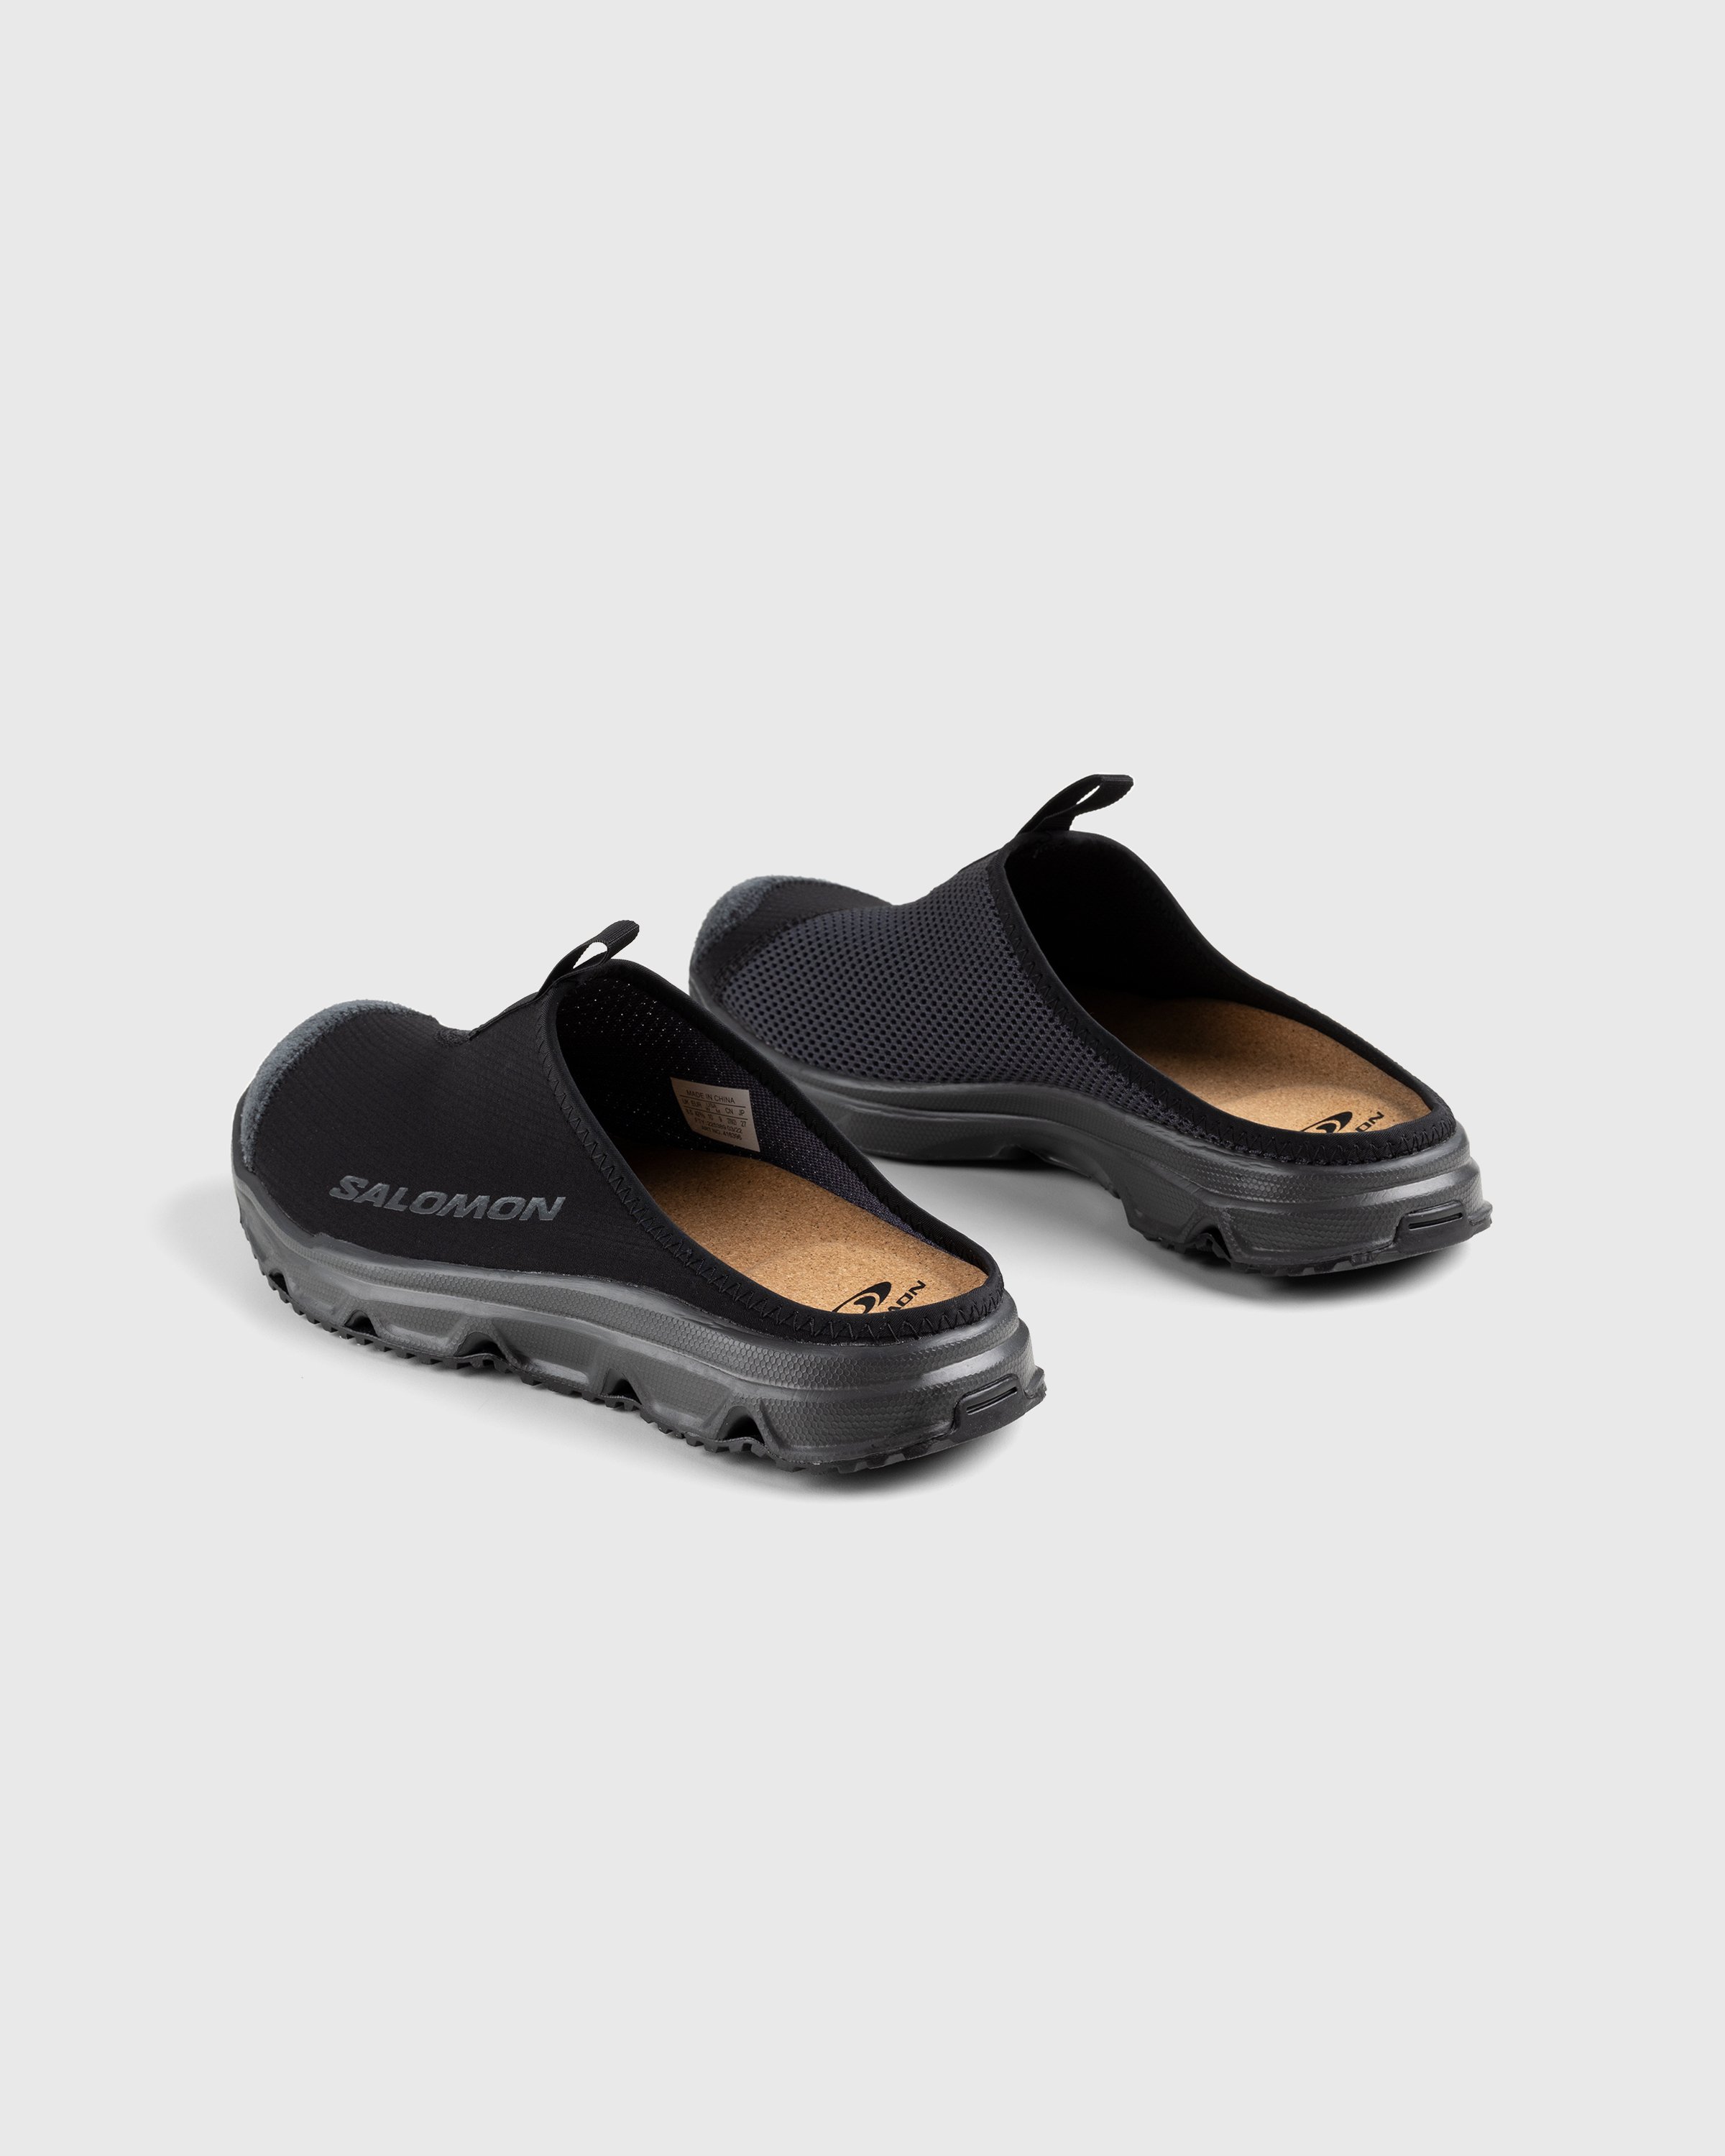 Salomon - RX Slide 3.0 Black/Phantom/Ebony - Footwear - Black - Image 4